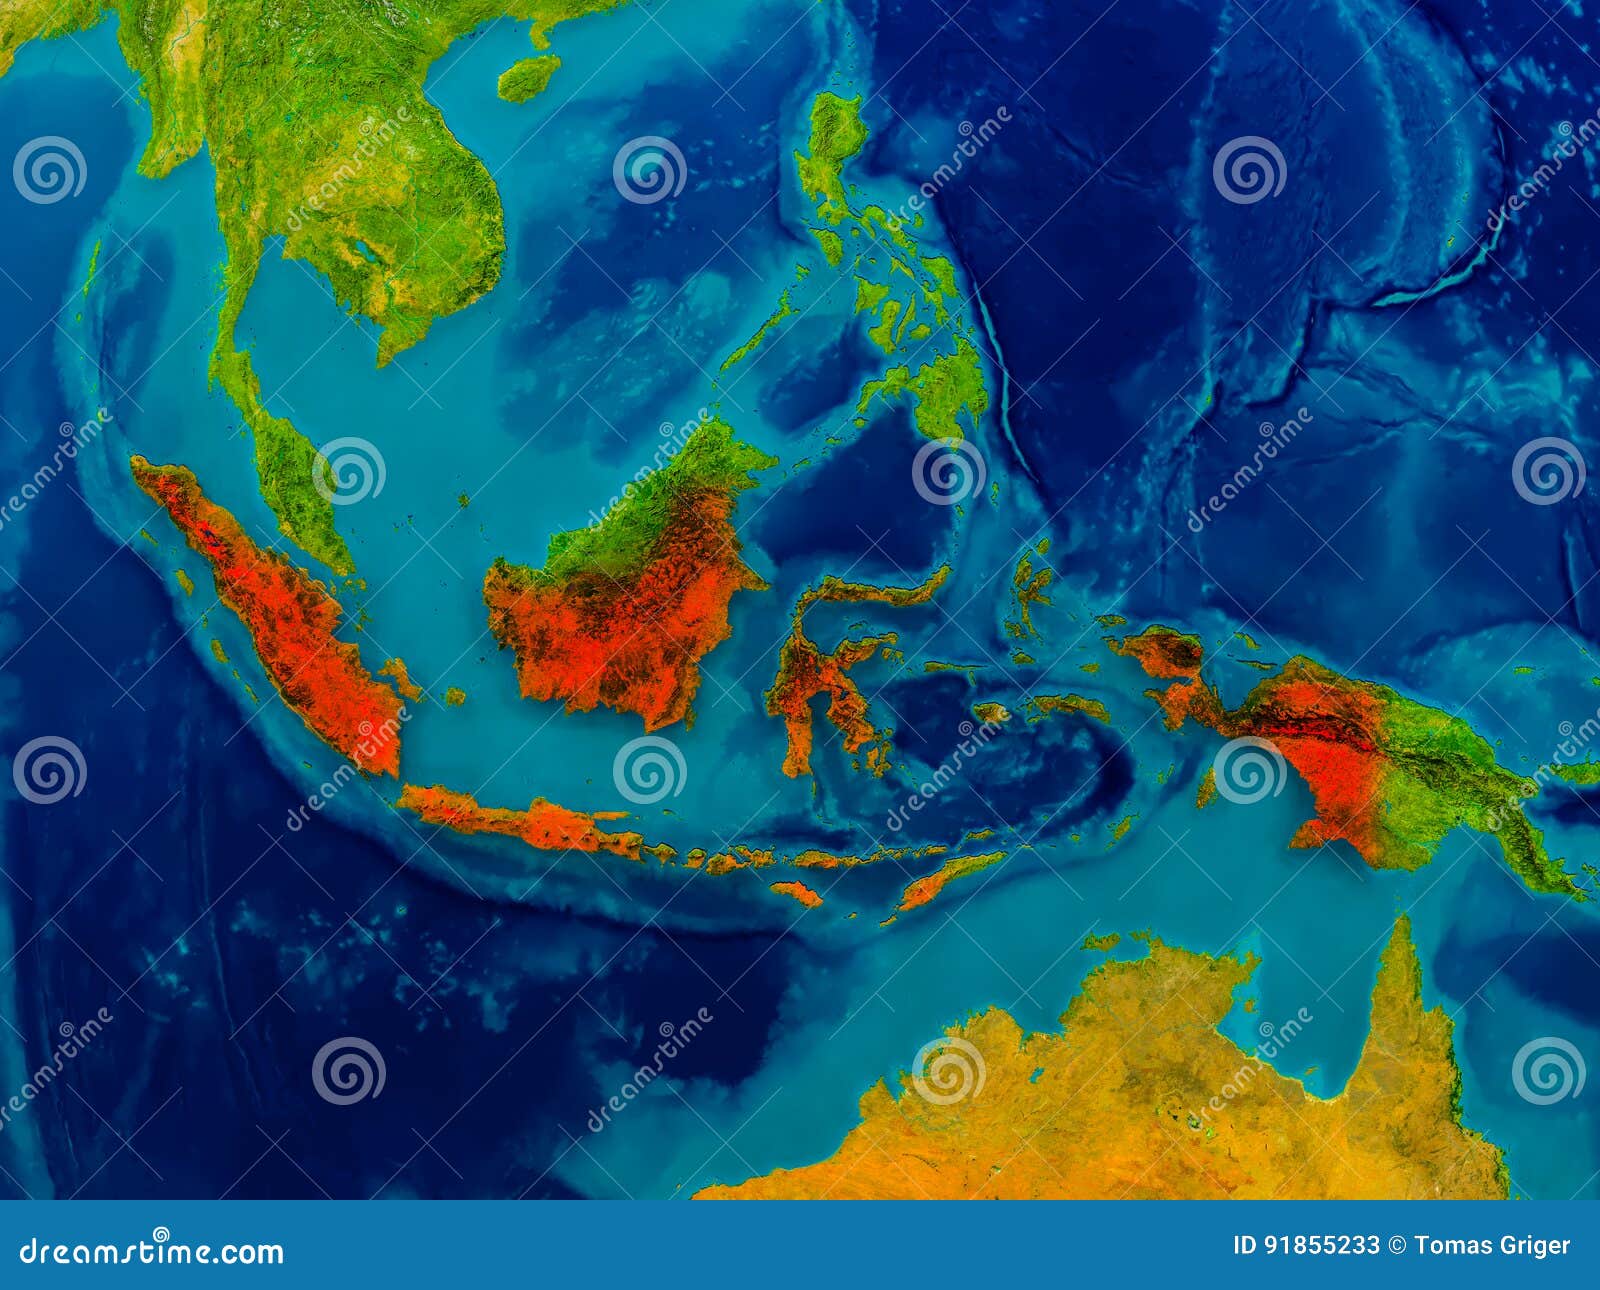 Indonesia on physical map stock illustration. Illustration of orbit